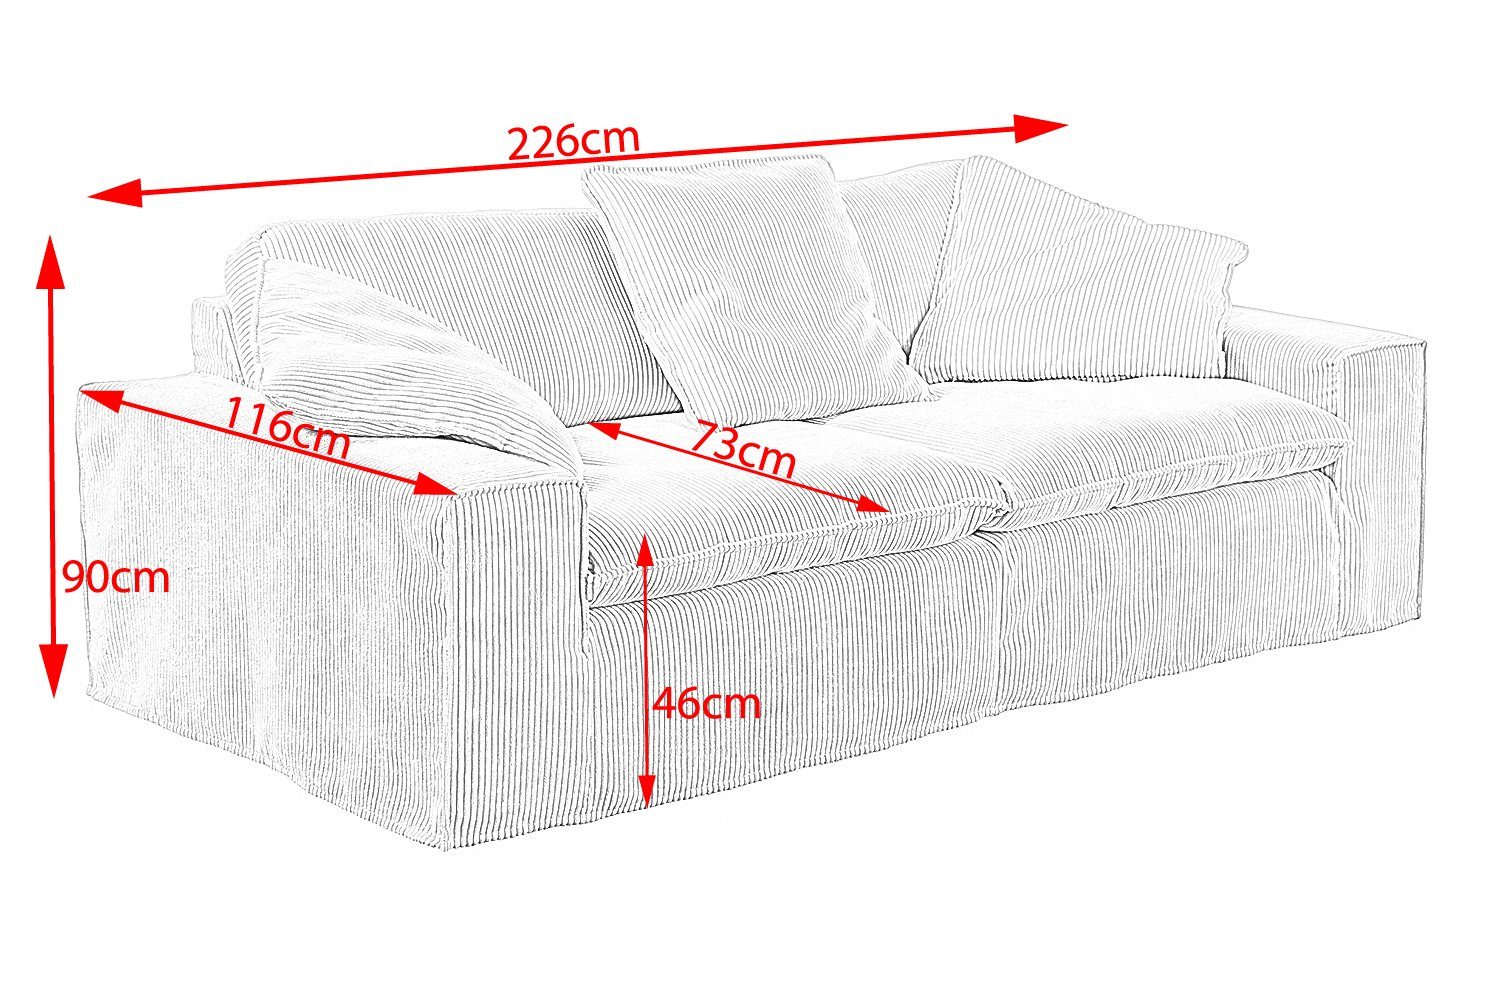 Breiten graubraun NETTA, Sofa Farben und KAWOLA versch. Bezug 3-Sitzer | abziehbar, Cord versch. graubraun